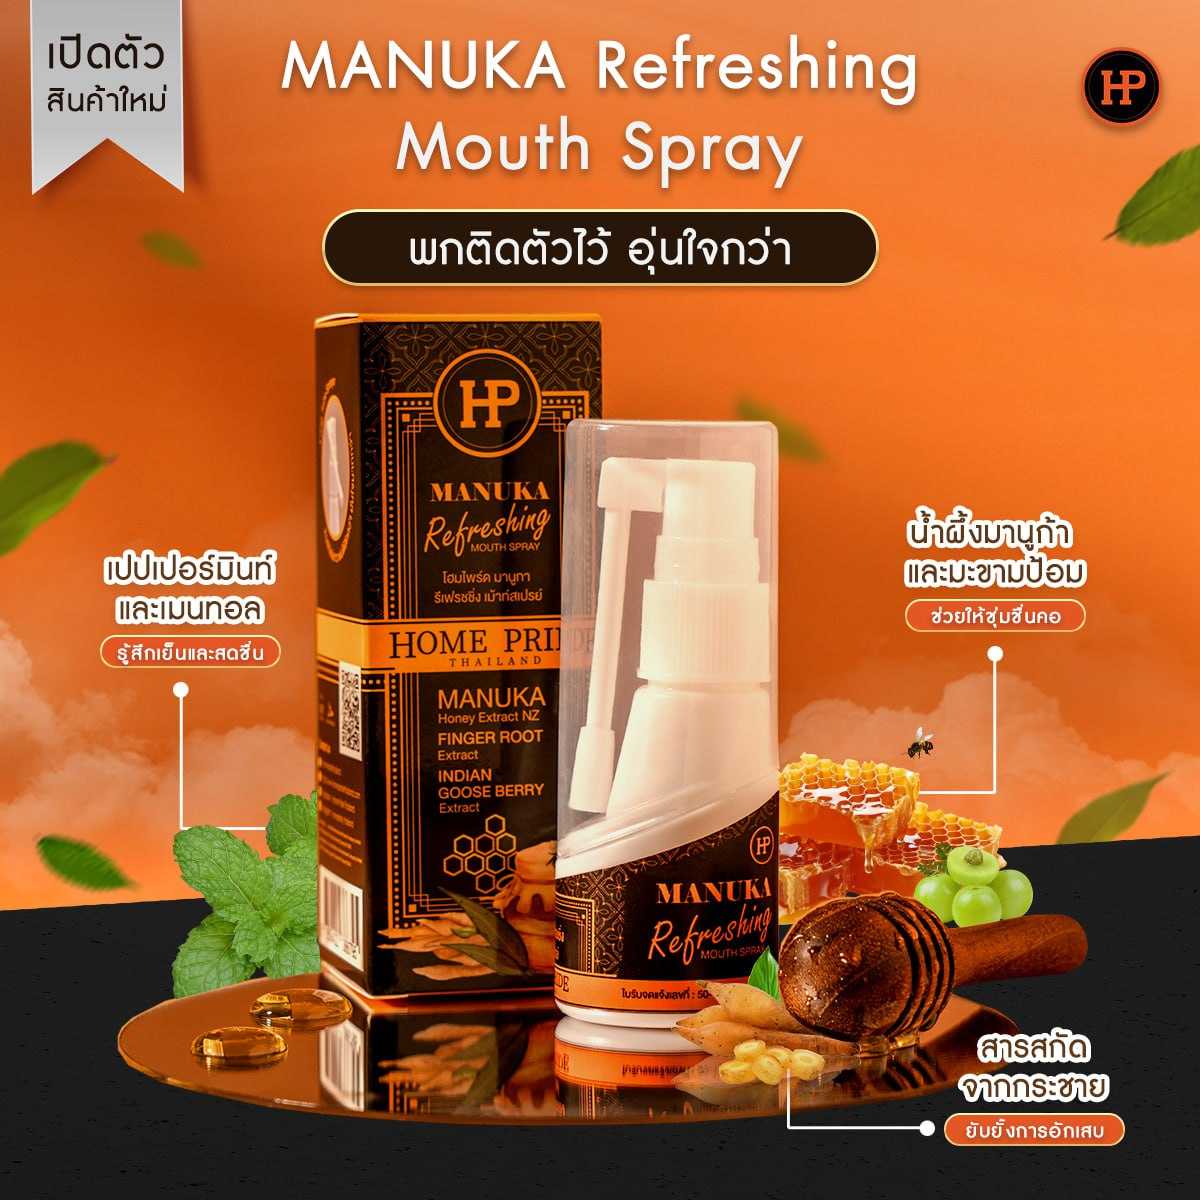 MANUKA Refreshing Mouth Spray ผลิตภัณฑ์สเปรย์สำหรับช่องปาก และลำคอ